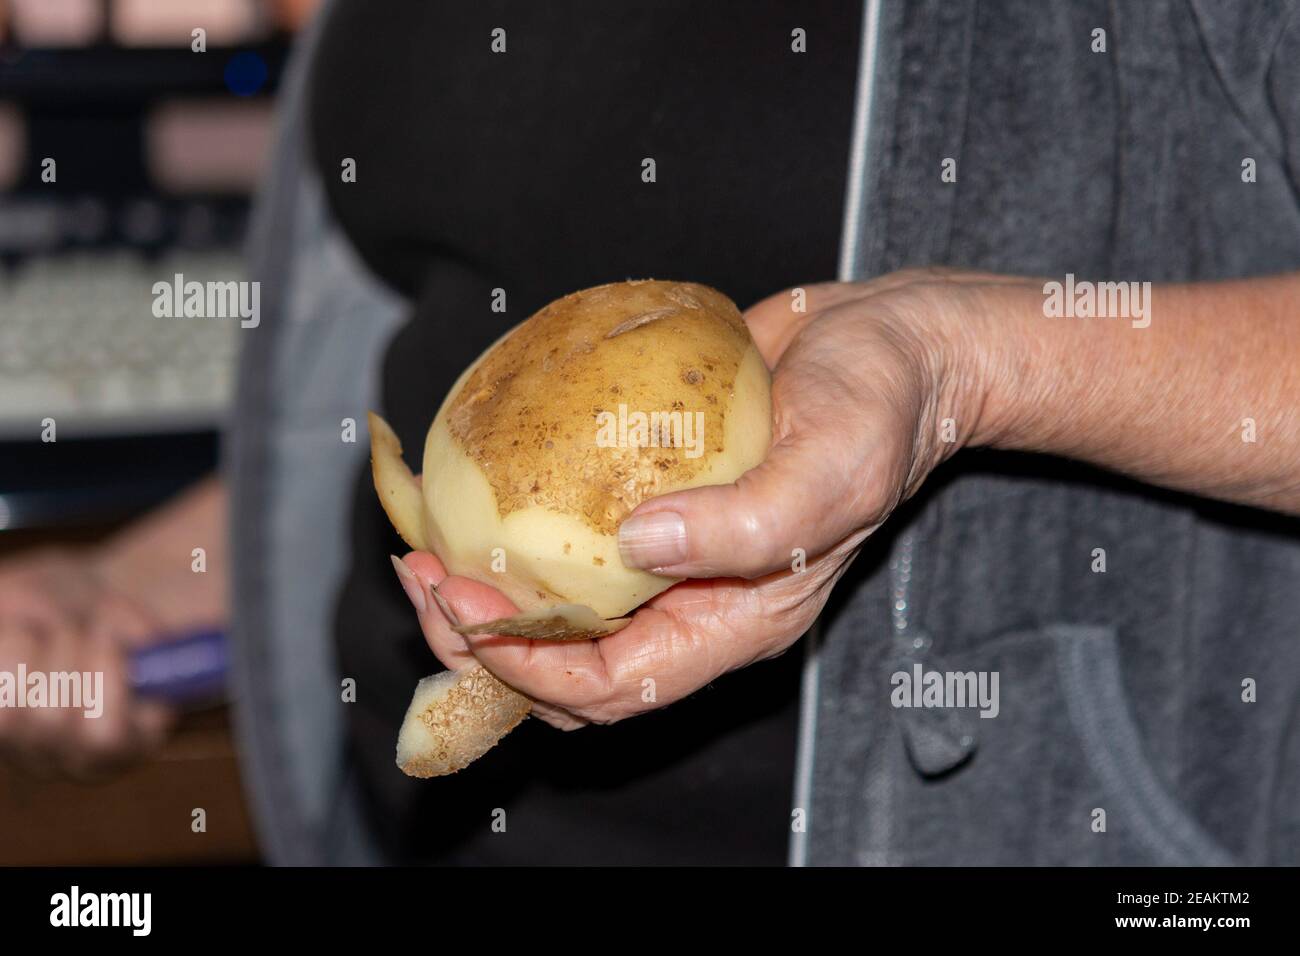 Unpeeled potatoes in hand Stock Photo